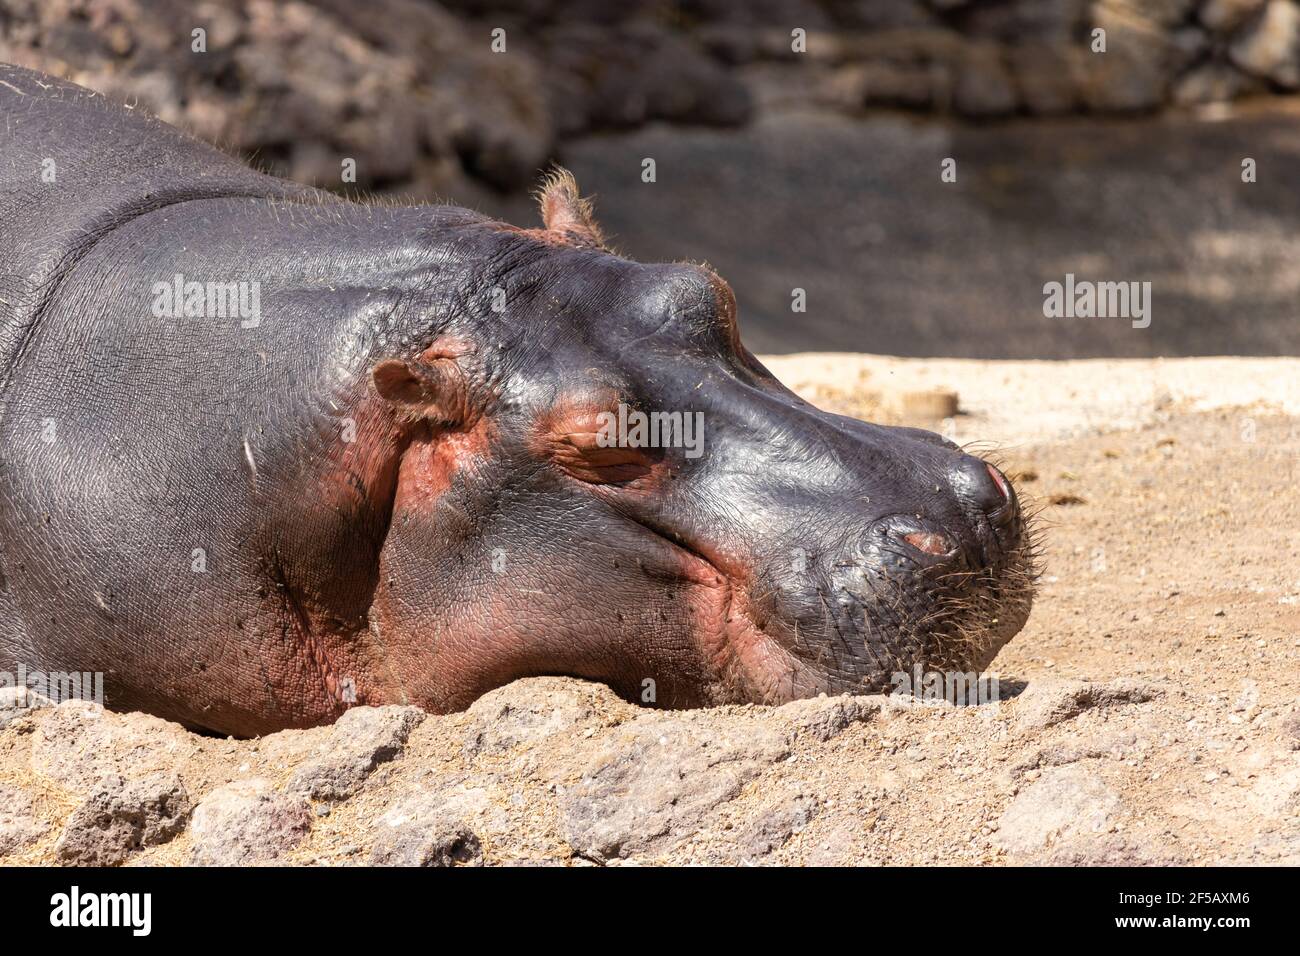 Sleeping hippopotamus. Resting hippo. Big animal in Zoo. Stock Photo